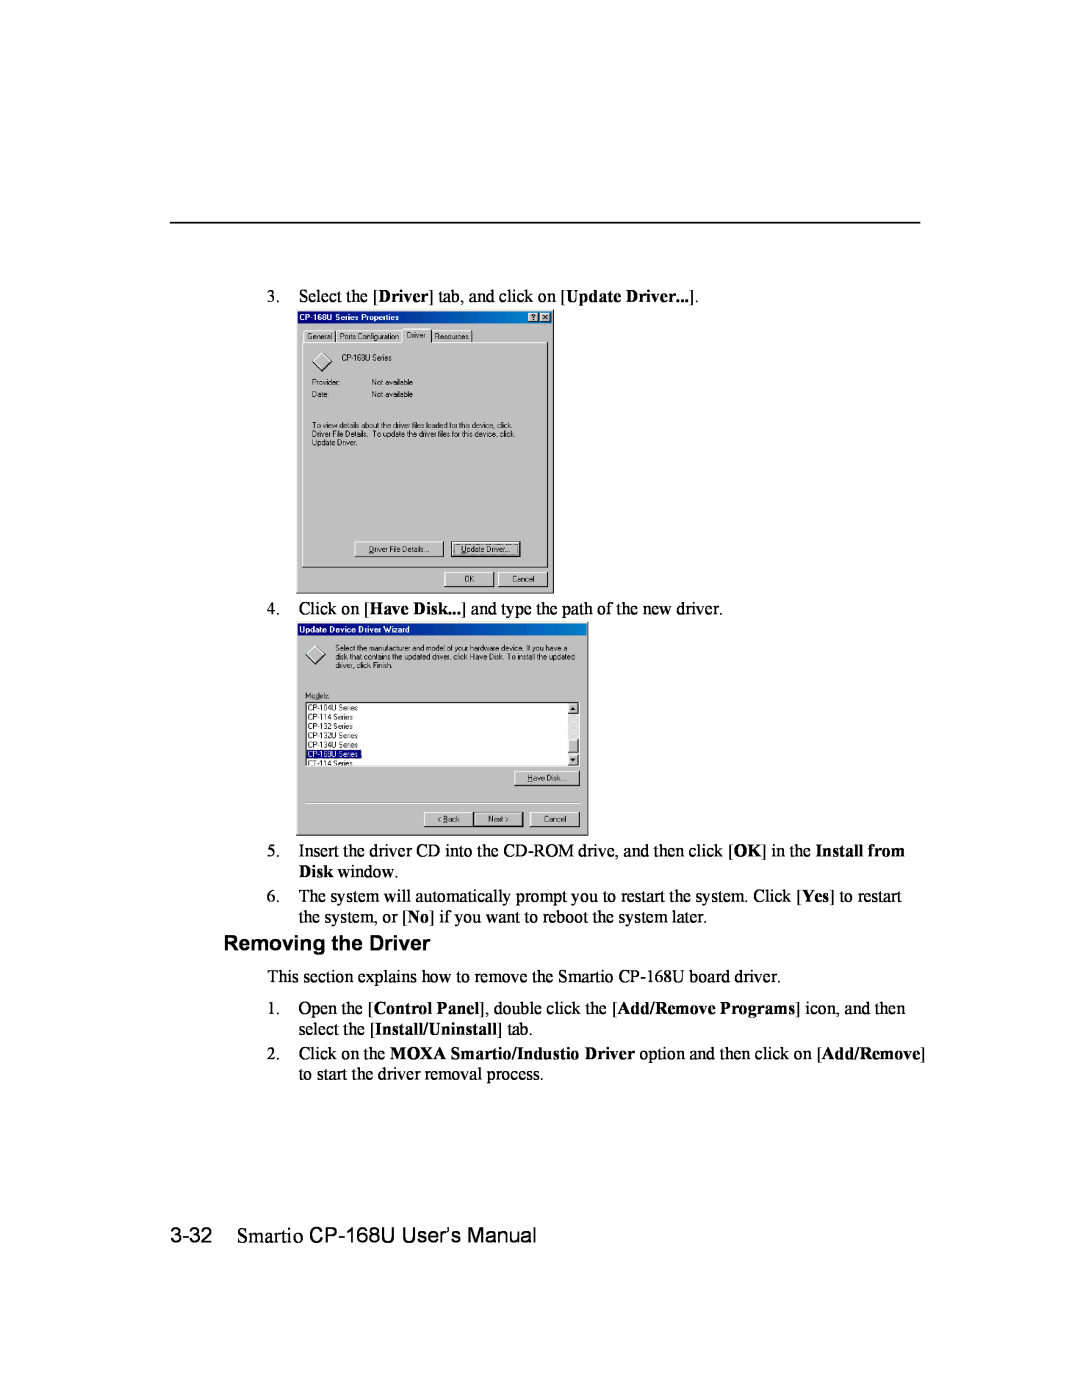 Moxa Technologies user manual Smartio CP-168U User’s Manual, Removing the Driver 